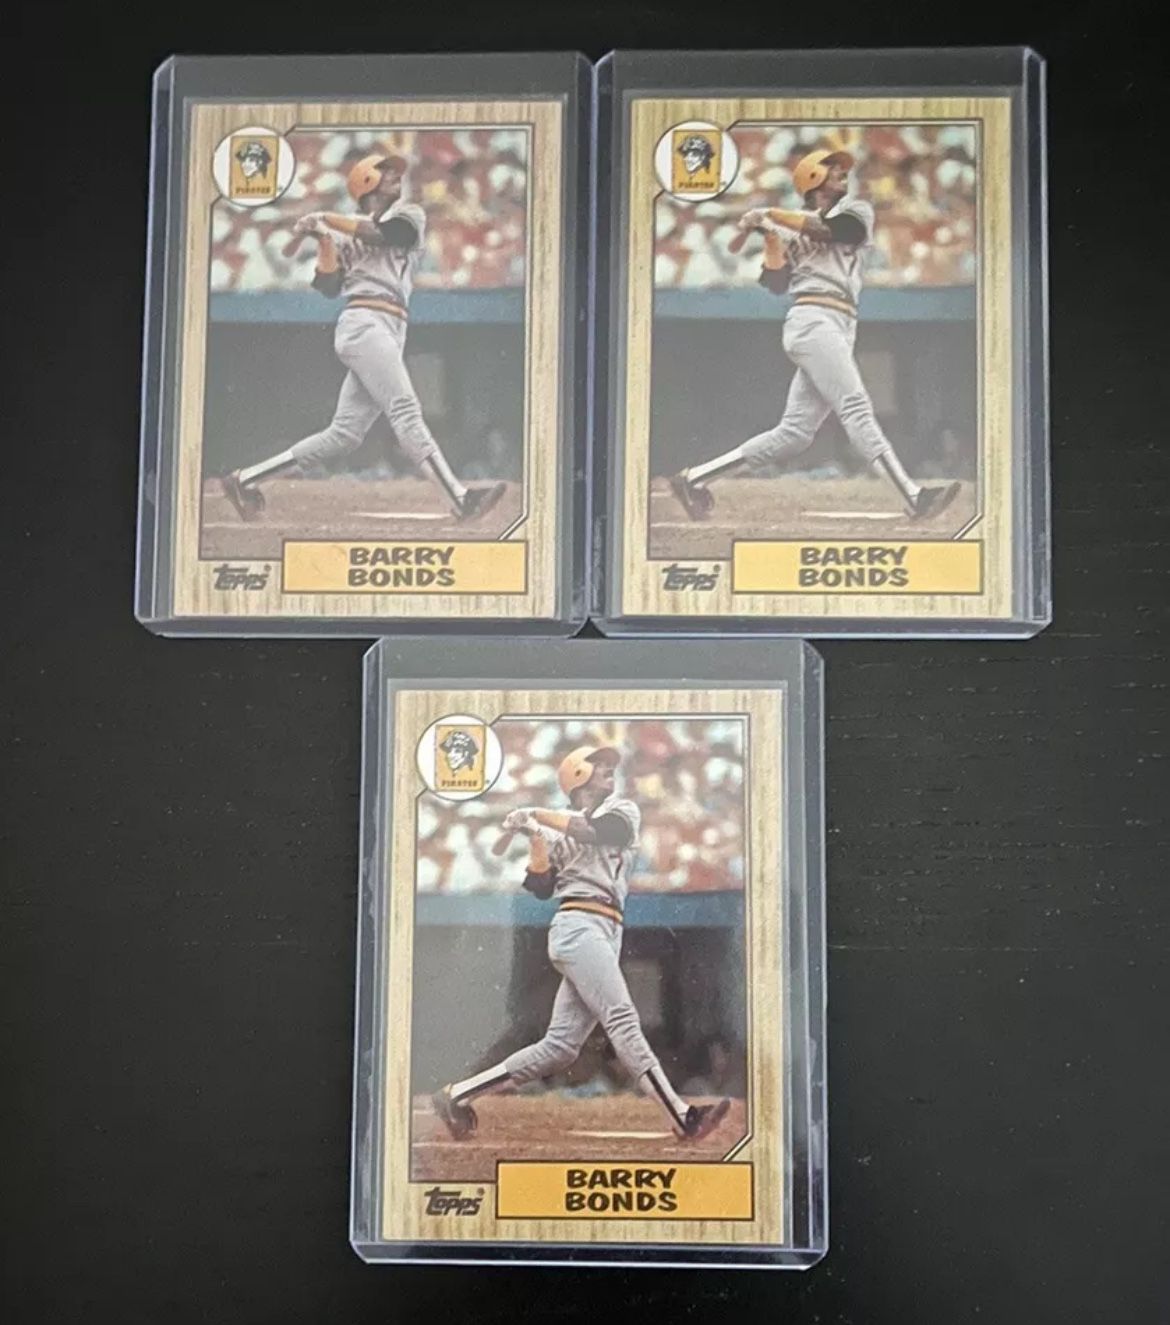 Barry Bonds Star Baseball Player Card Bundle